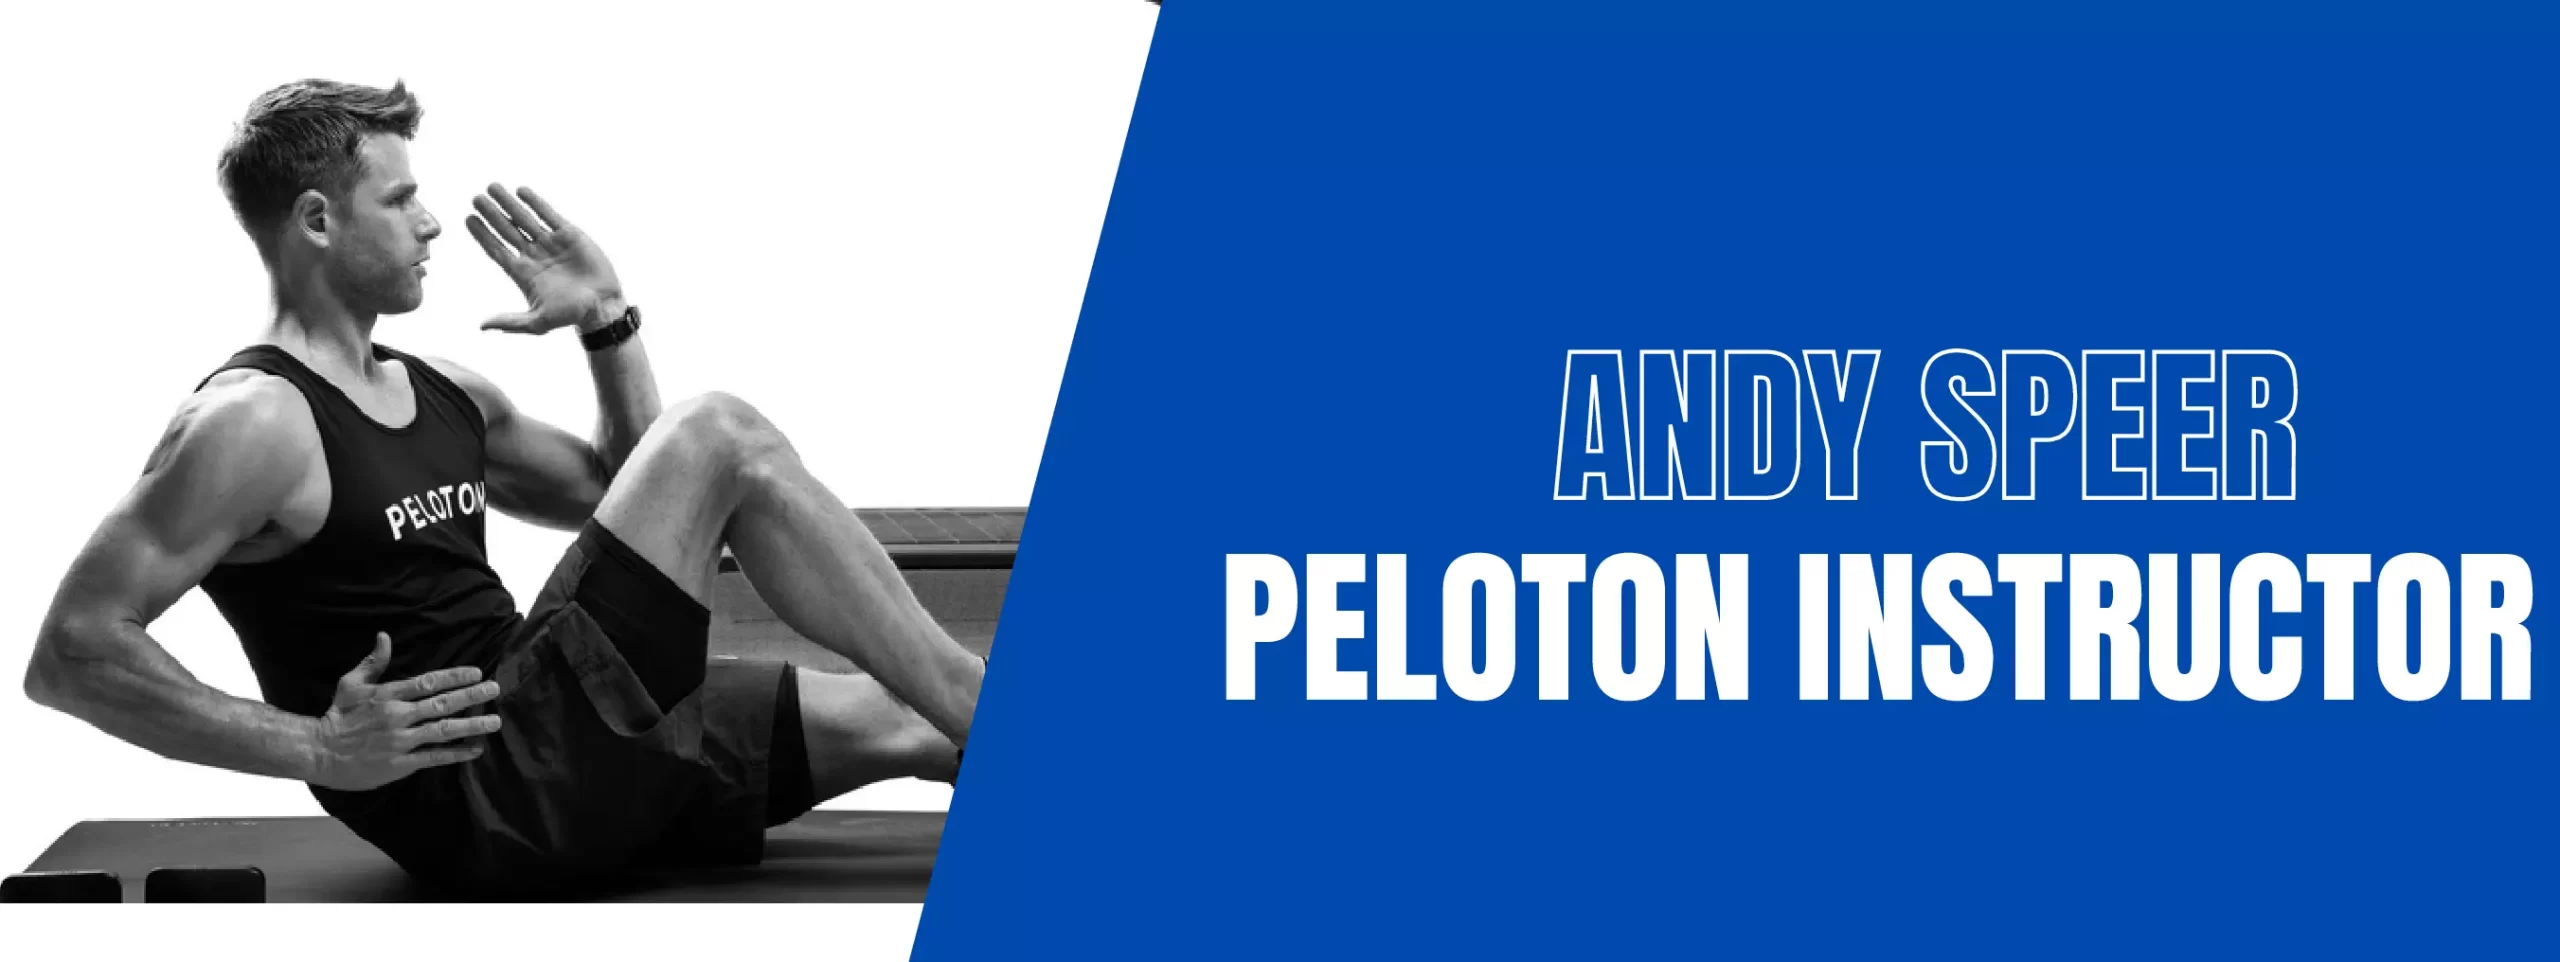 Andy Speer Peloton Instructor